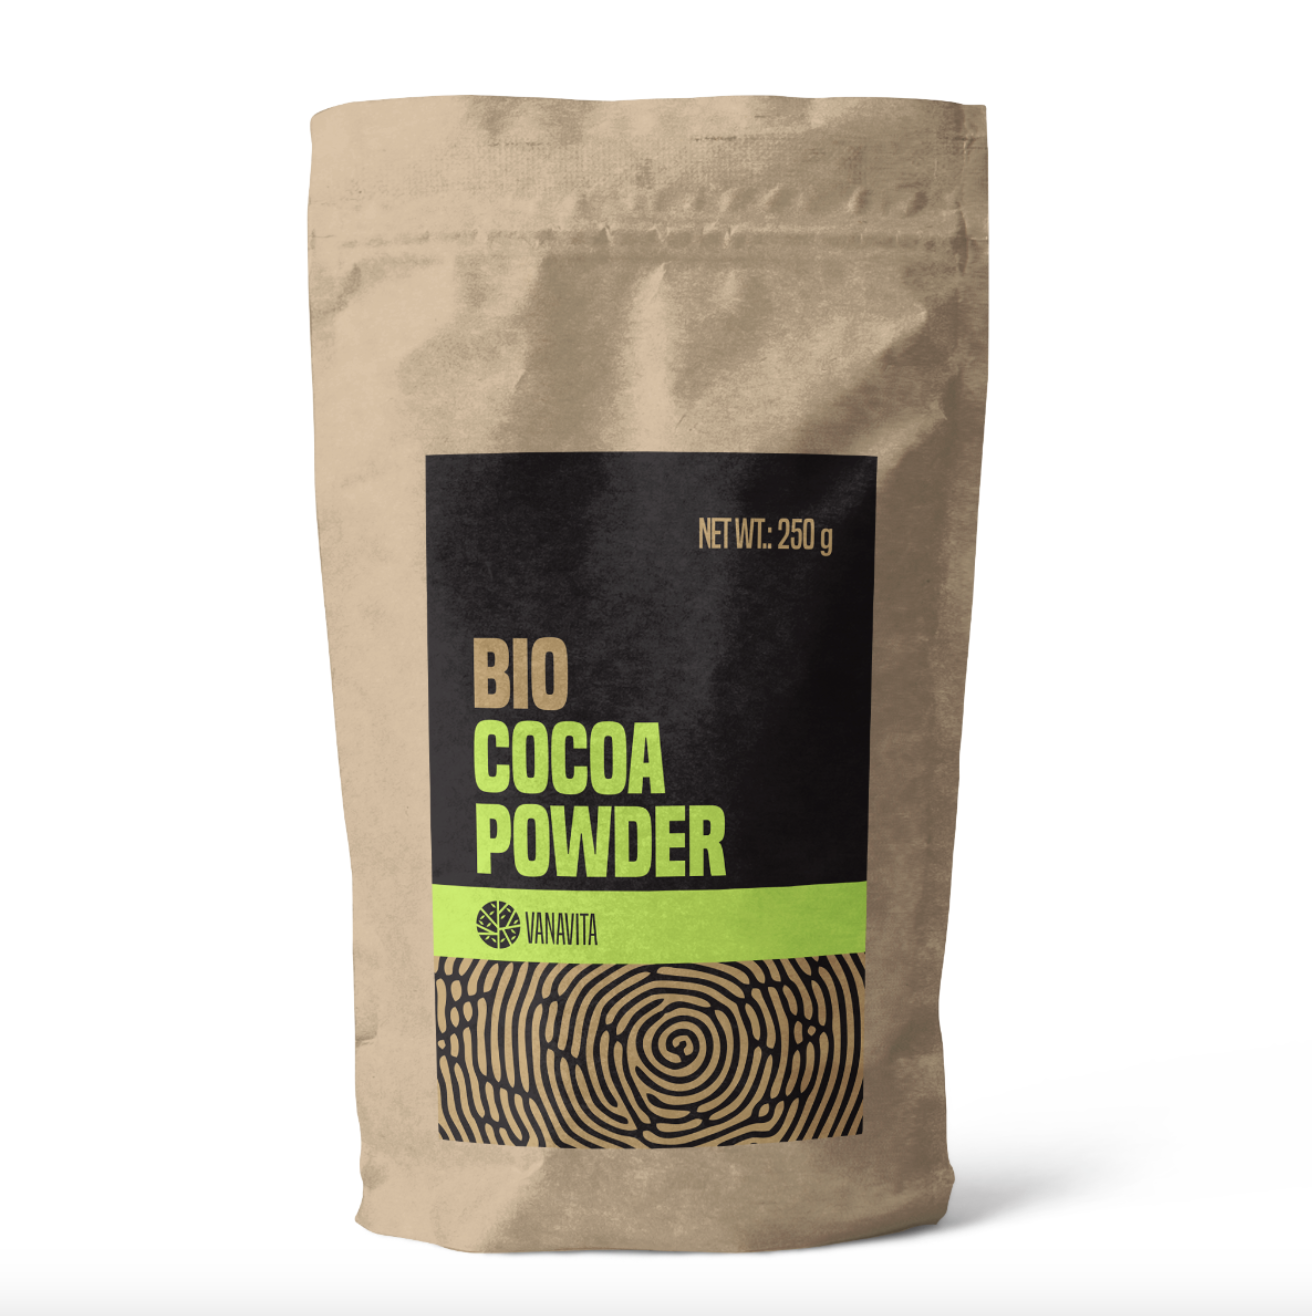 BIO Cocoa Powder from VanaVita